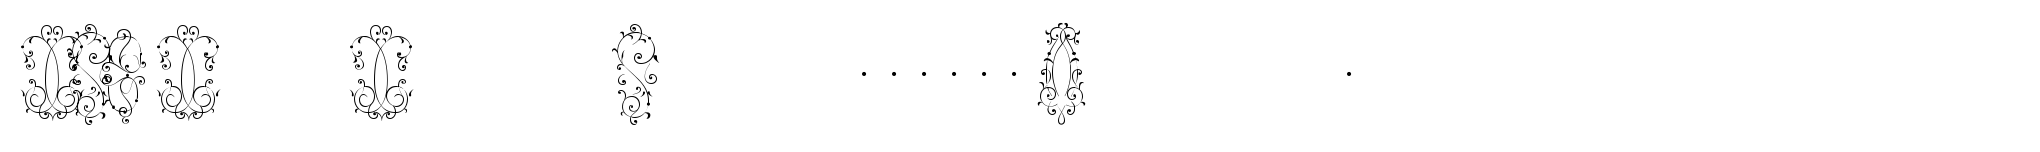 MFC Manoir Monogram Flourish (25000 Impressions) image